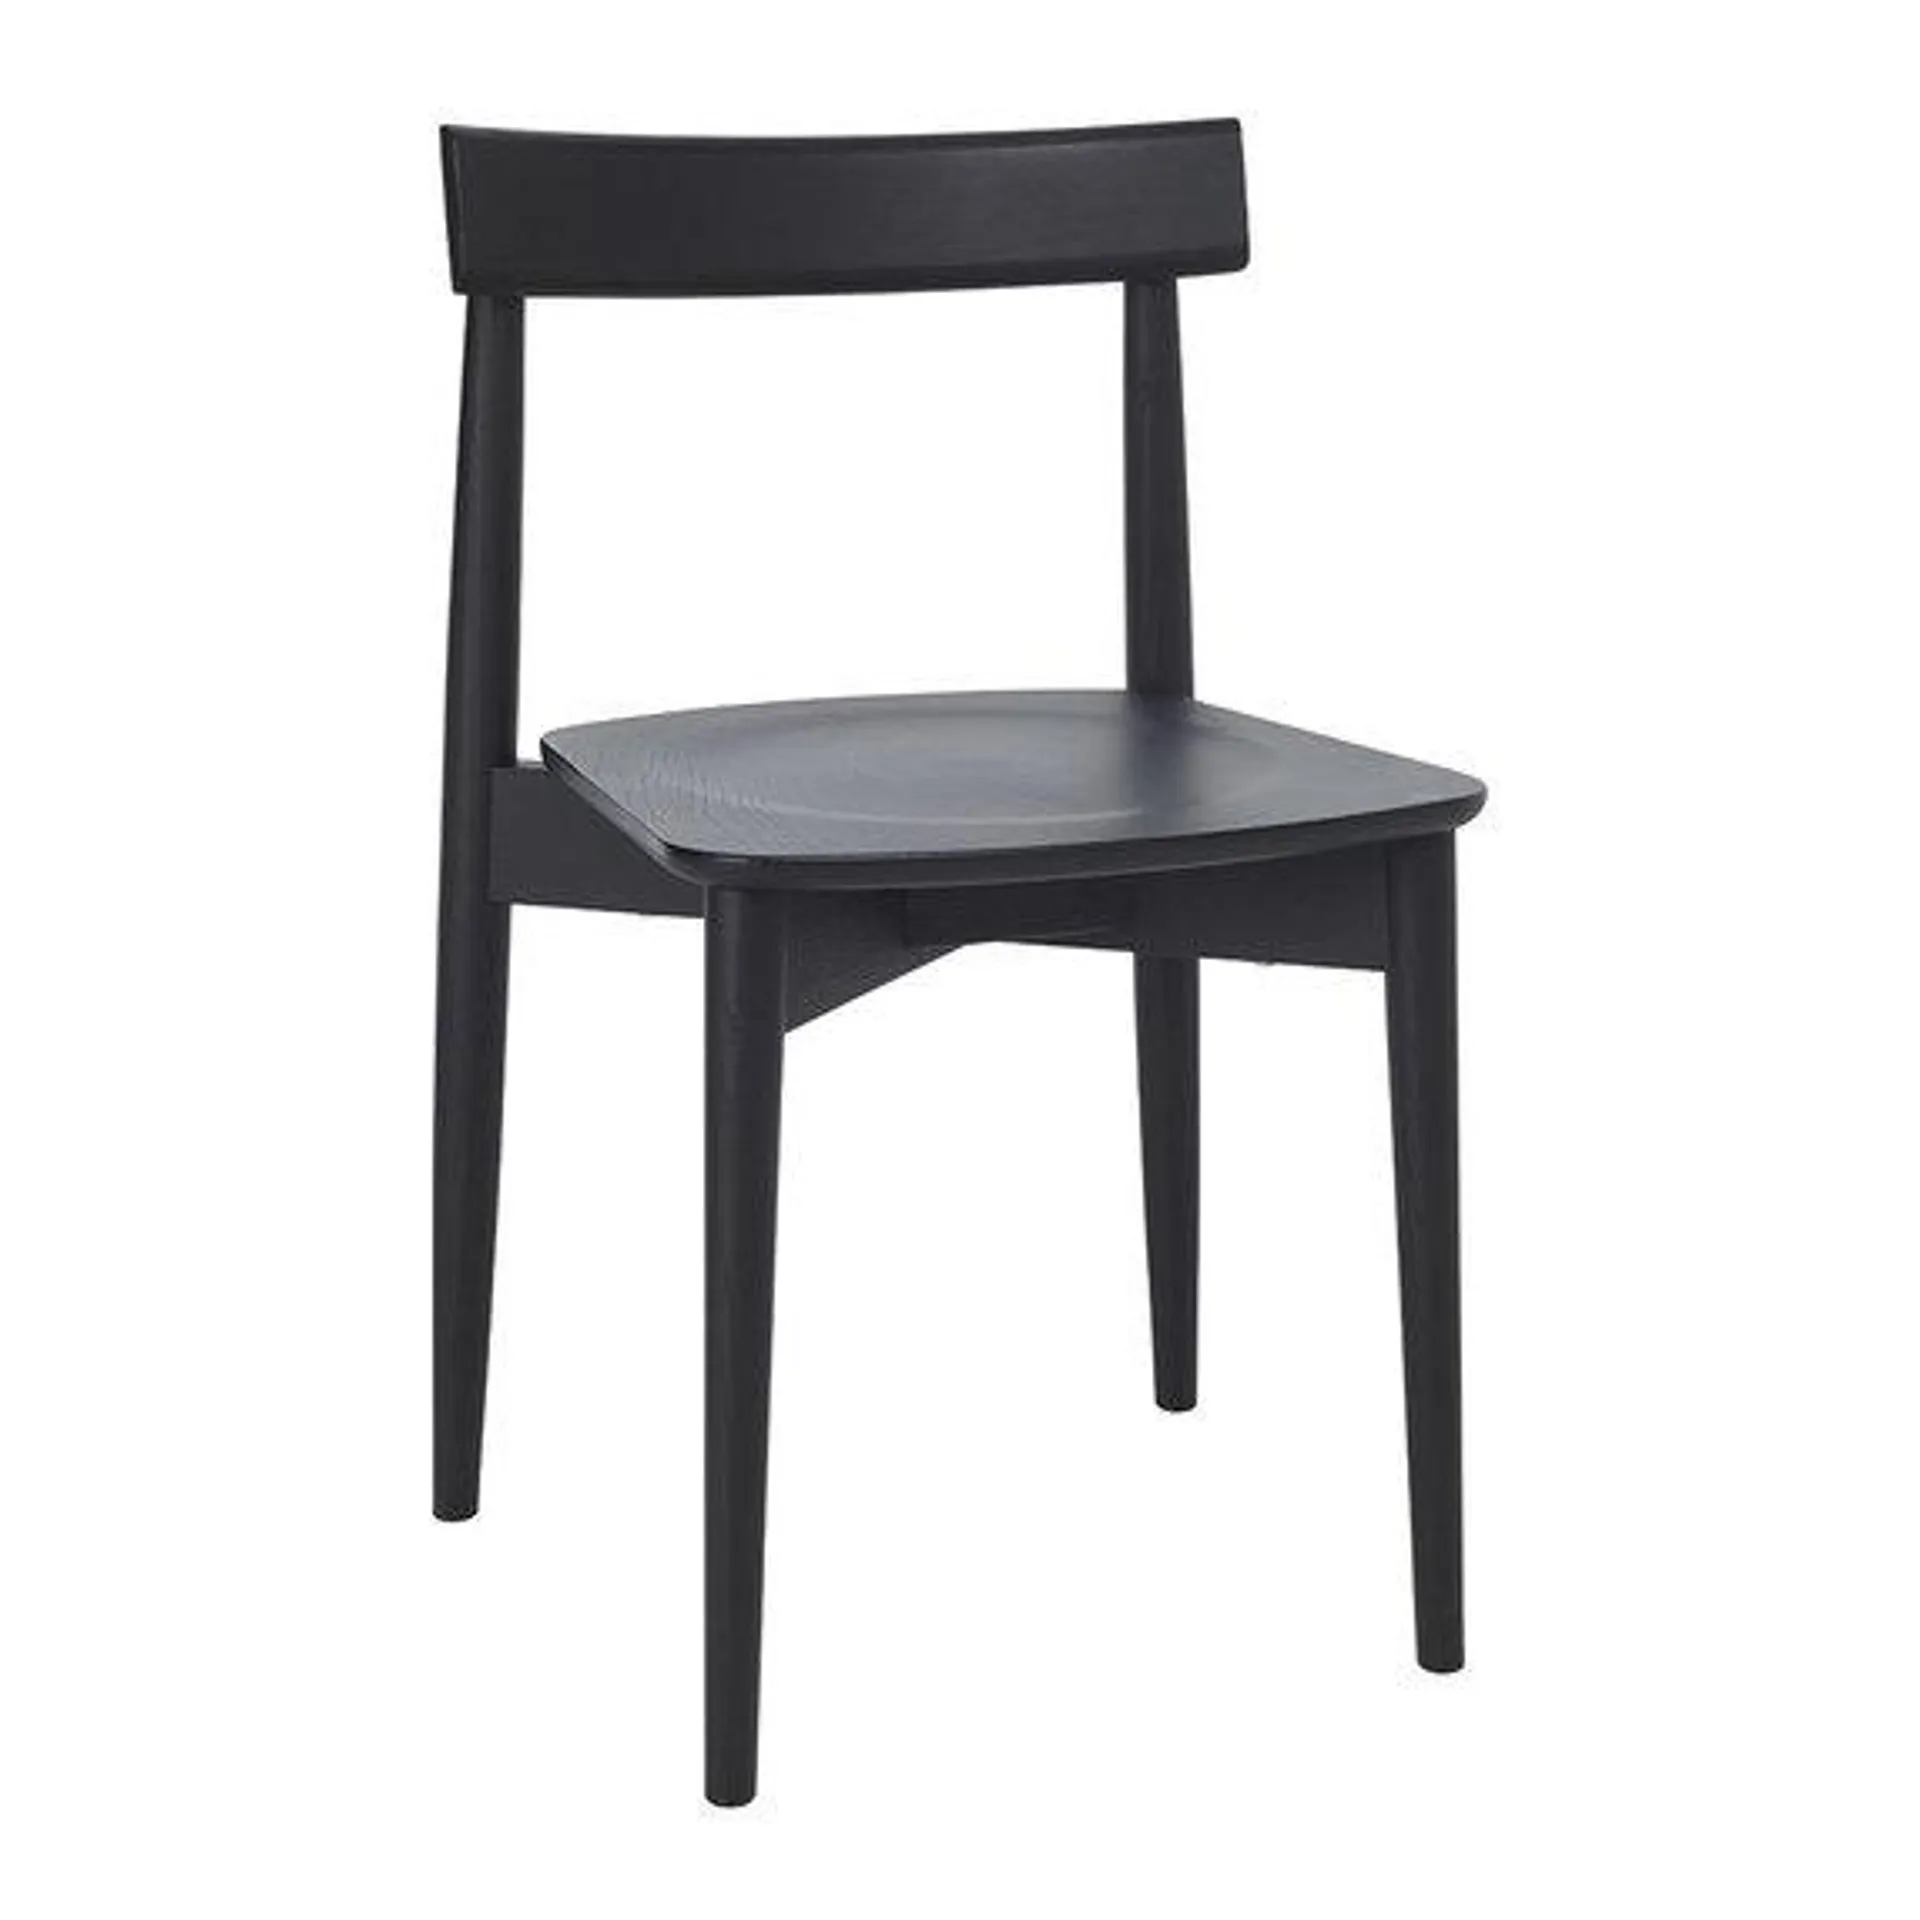 Chair in Black Ash